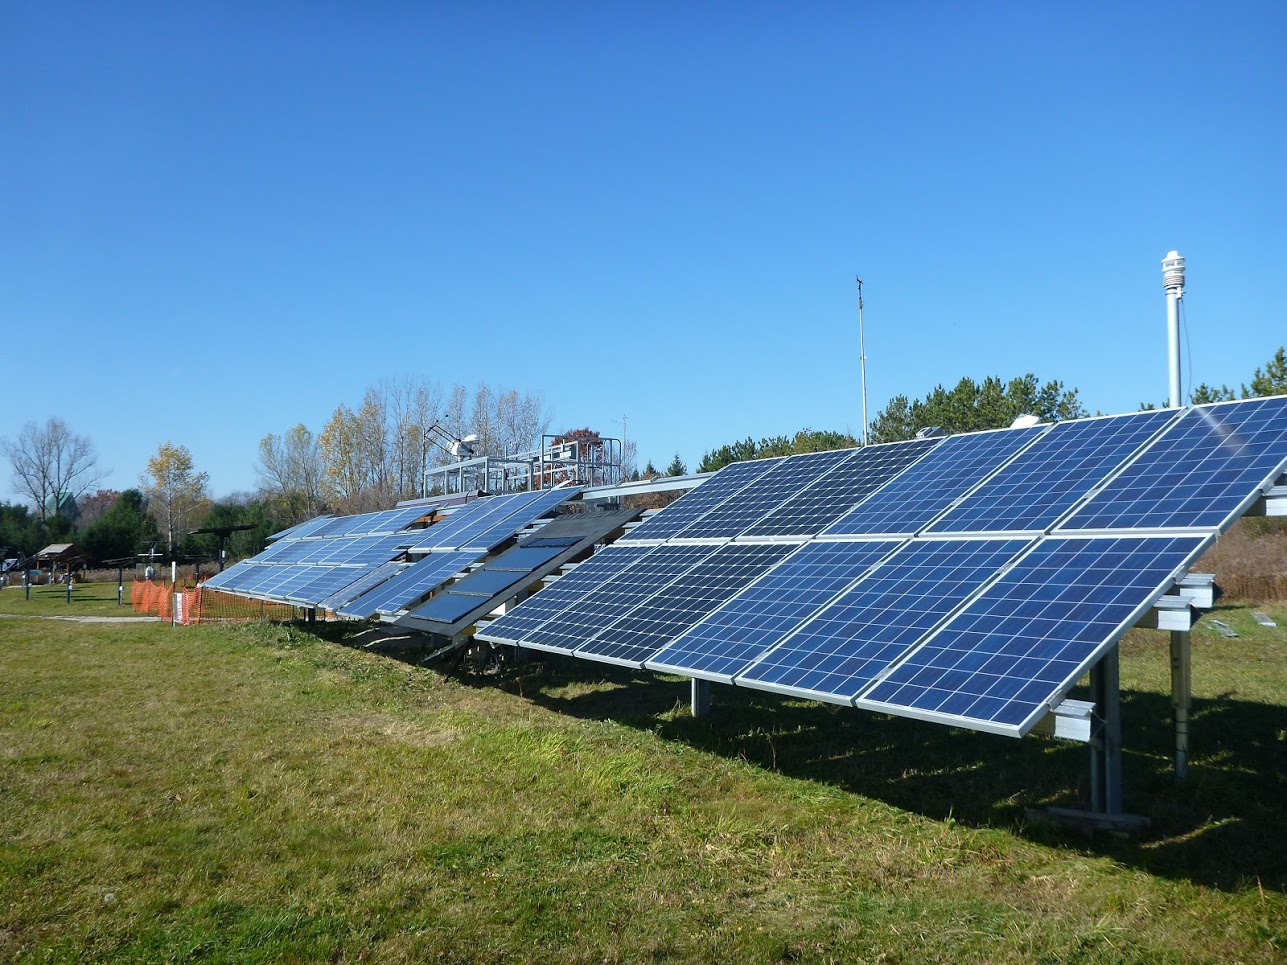 Solar PV arrays